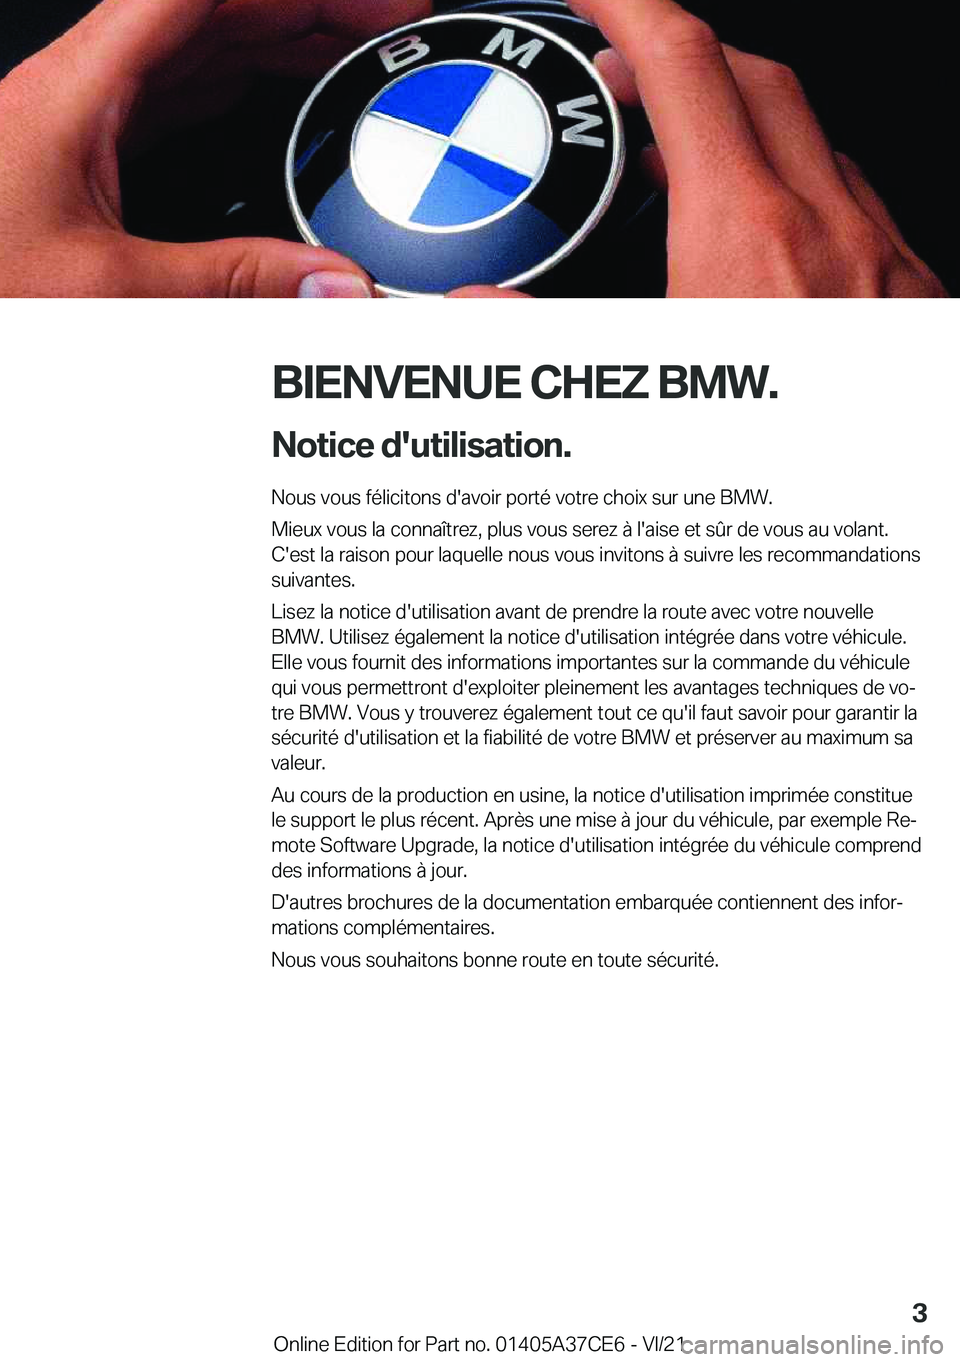 BMW X5 2022  Notices Demploi (in French) �B�I�E�N�V�E�N�U�E��C�H�E�Z��B�M�W�.�N�o�t�i�c�e��d�'�u�t�i�l�i�s�a�t�i�o�n�.
�N�o�u�s��v�o�u�s��f�é�l�i�c�i�t�o�n�s��d�'�a�v�o�i�r��p�o�r�t�é��v�o�t�r�e��c�h�o�i�x��s�u�r��u�n�e�